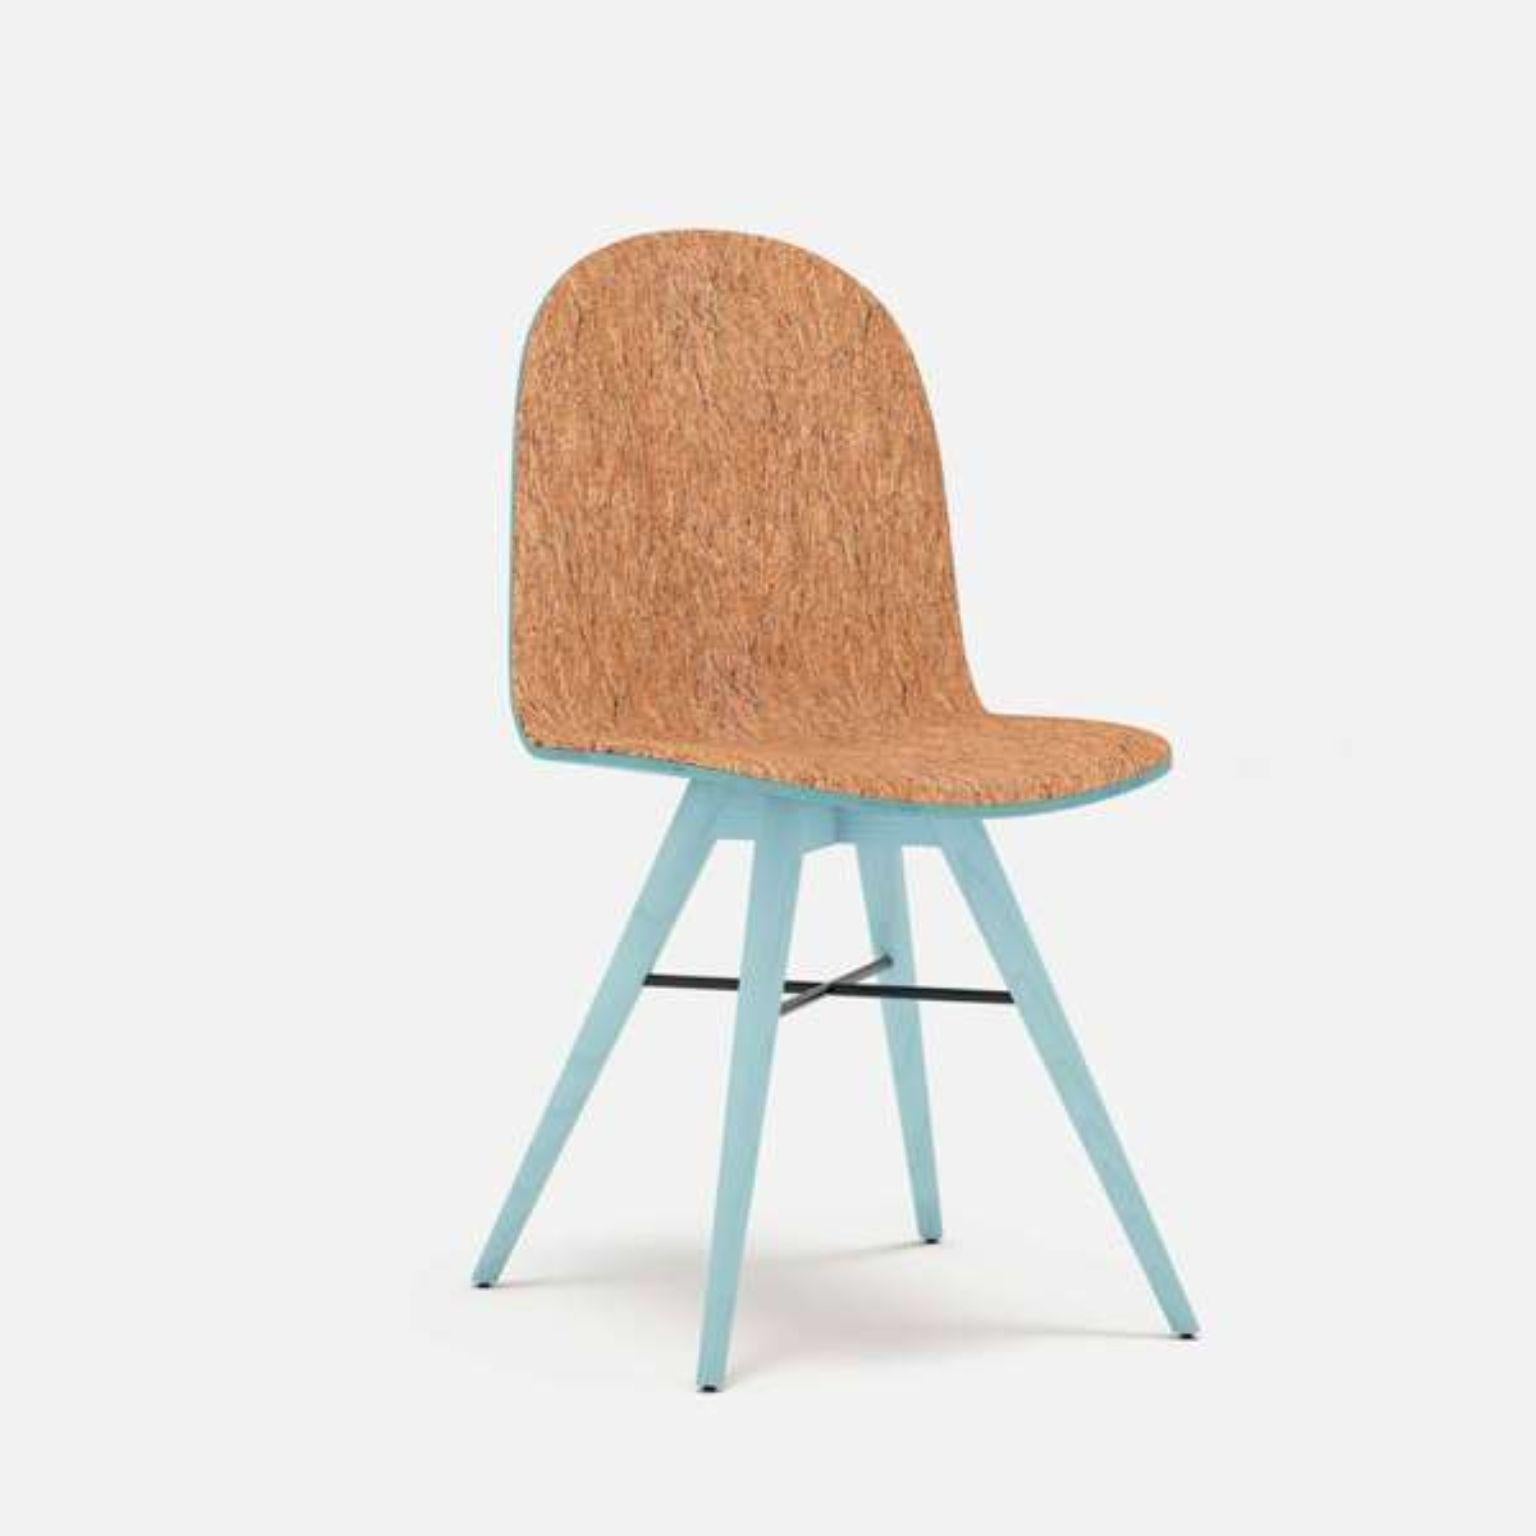 Solid American Walnut Contemporary Chair by Alexandre Caldas 1